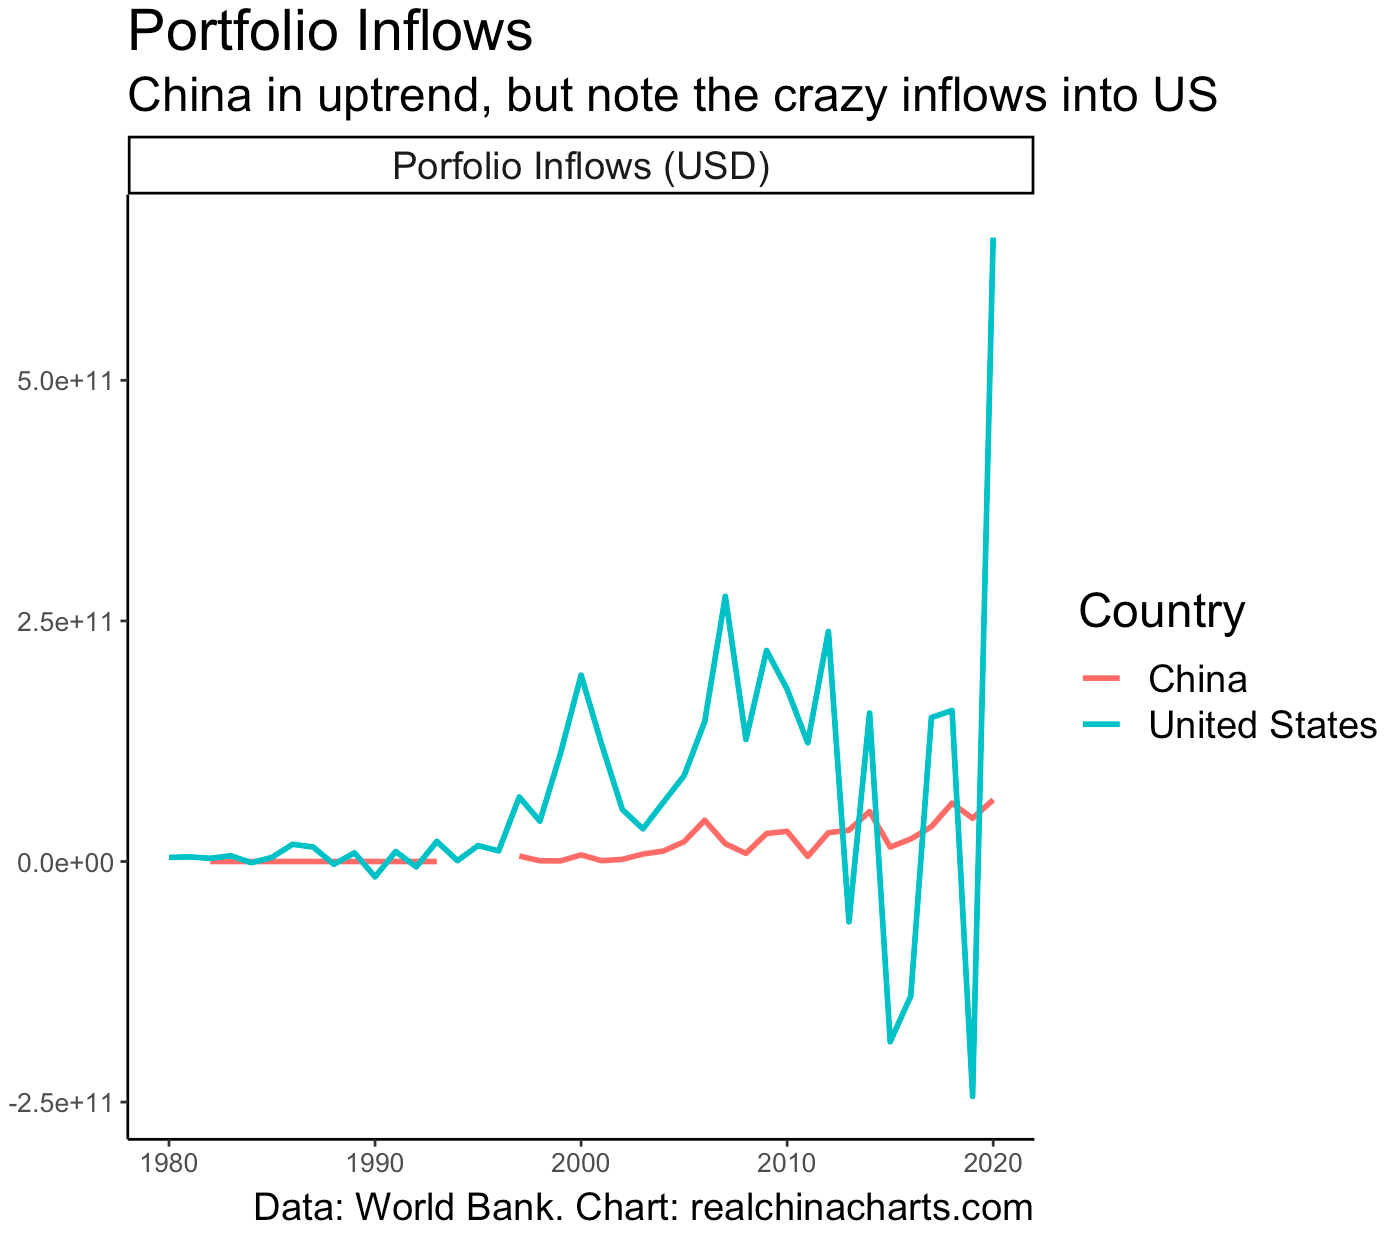 Portfolio inflows comparing China and United States